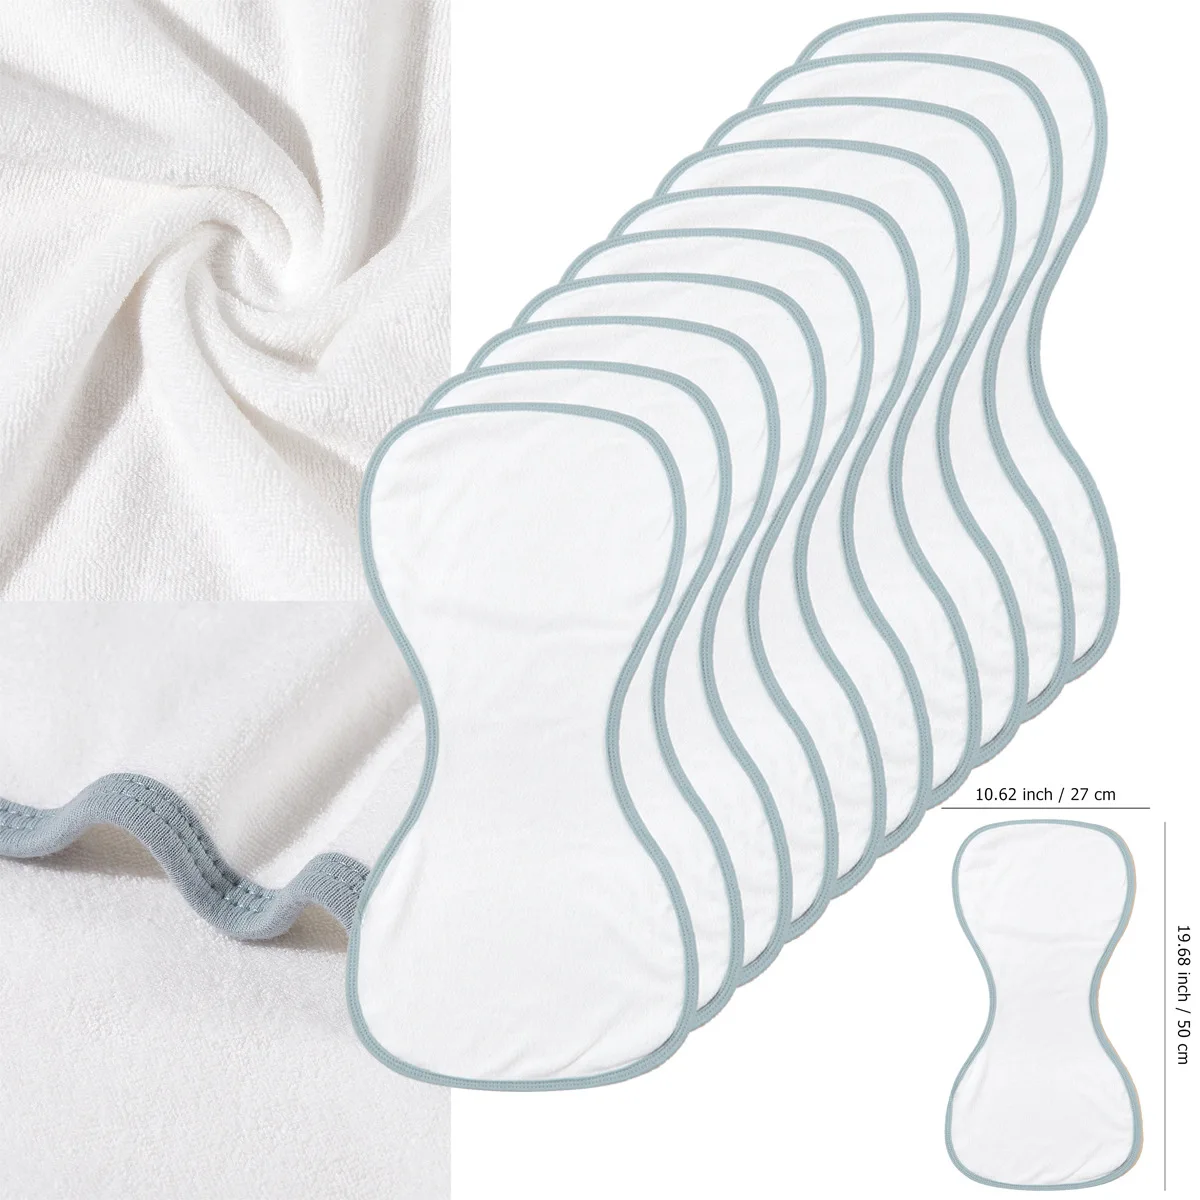 Burp Cloth Set Cotton Double Gauze Shoulder Cloth for Baby Drool Bandana Bibs Cotton Gauze Muslin Burping Cloths